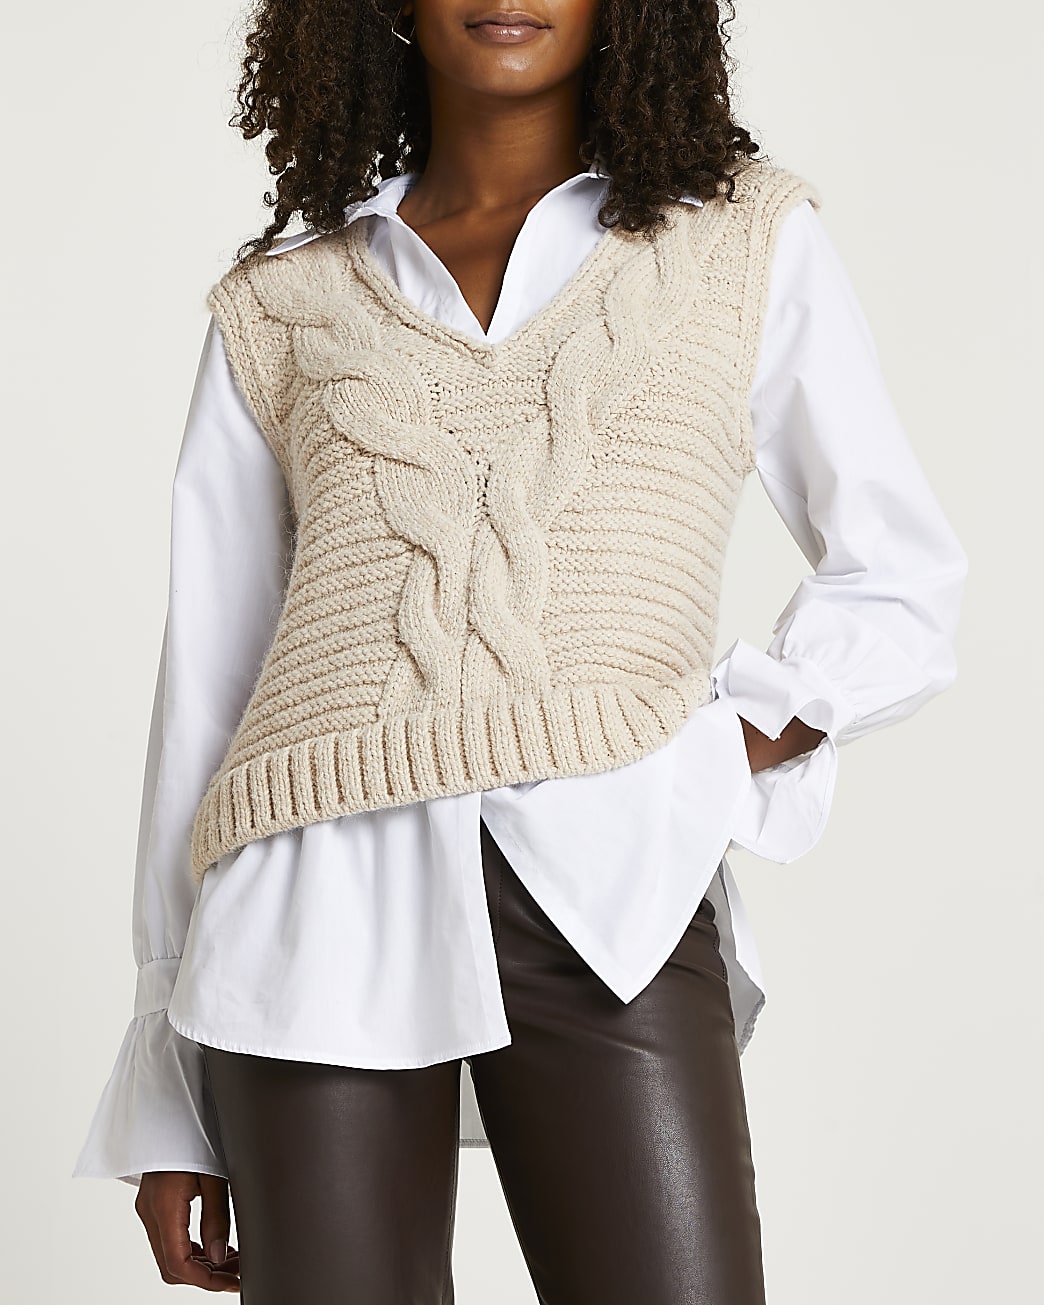 riverisland.com | Cream chunky cable knit shirt